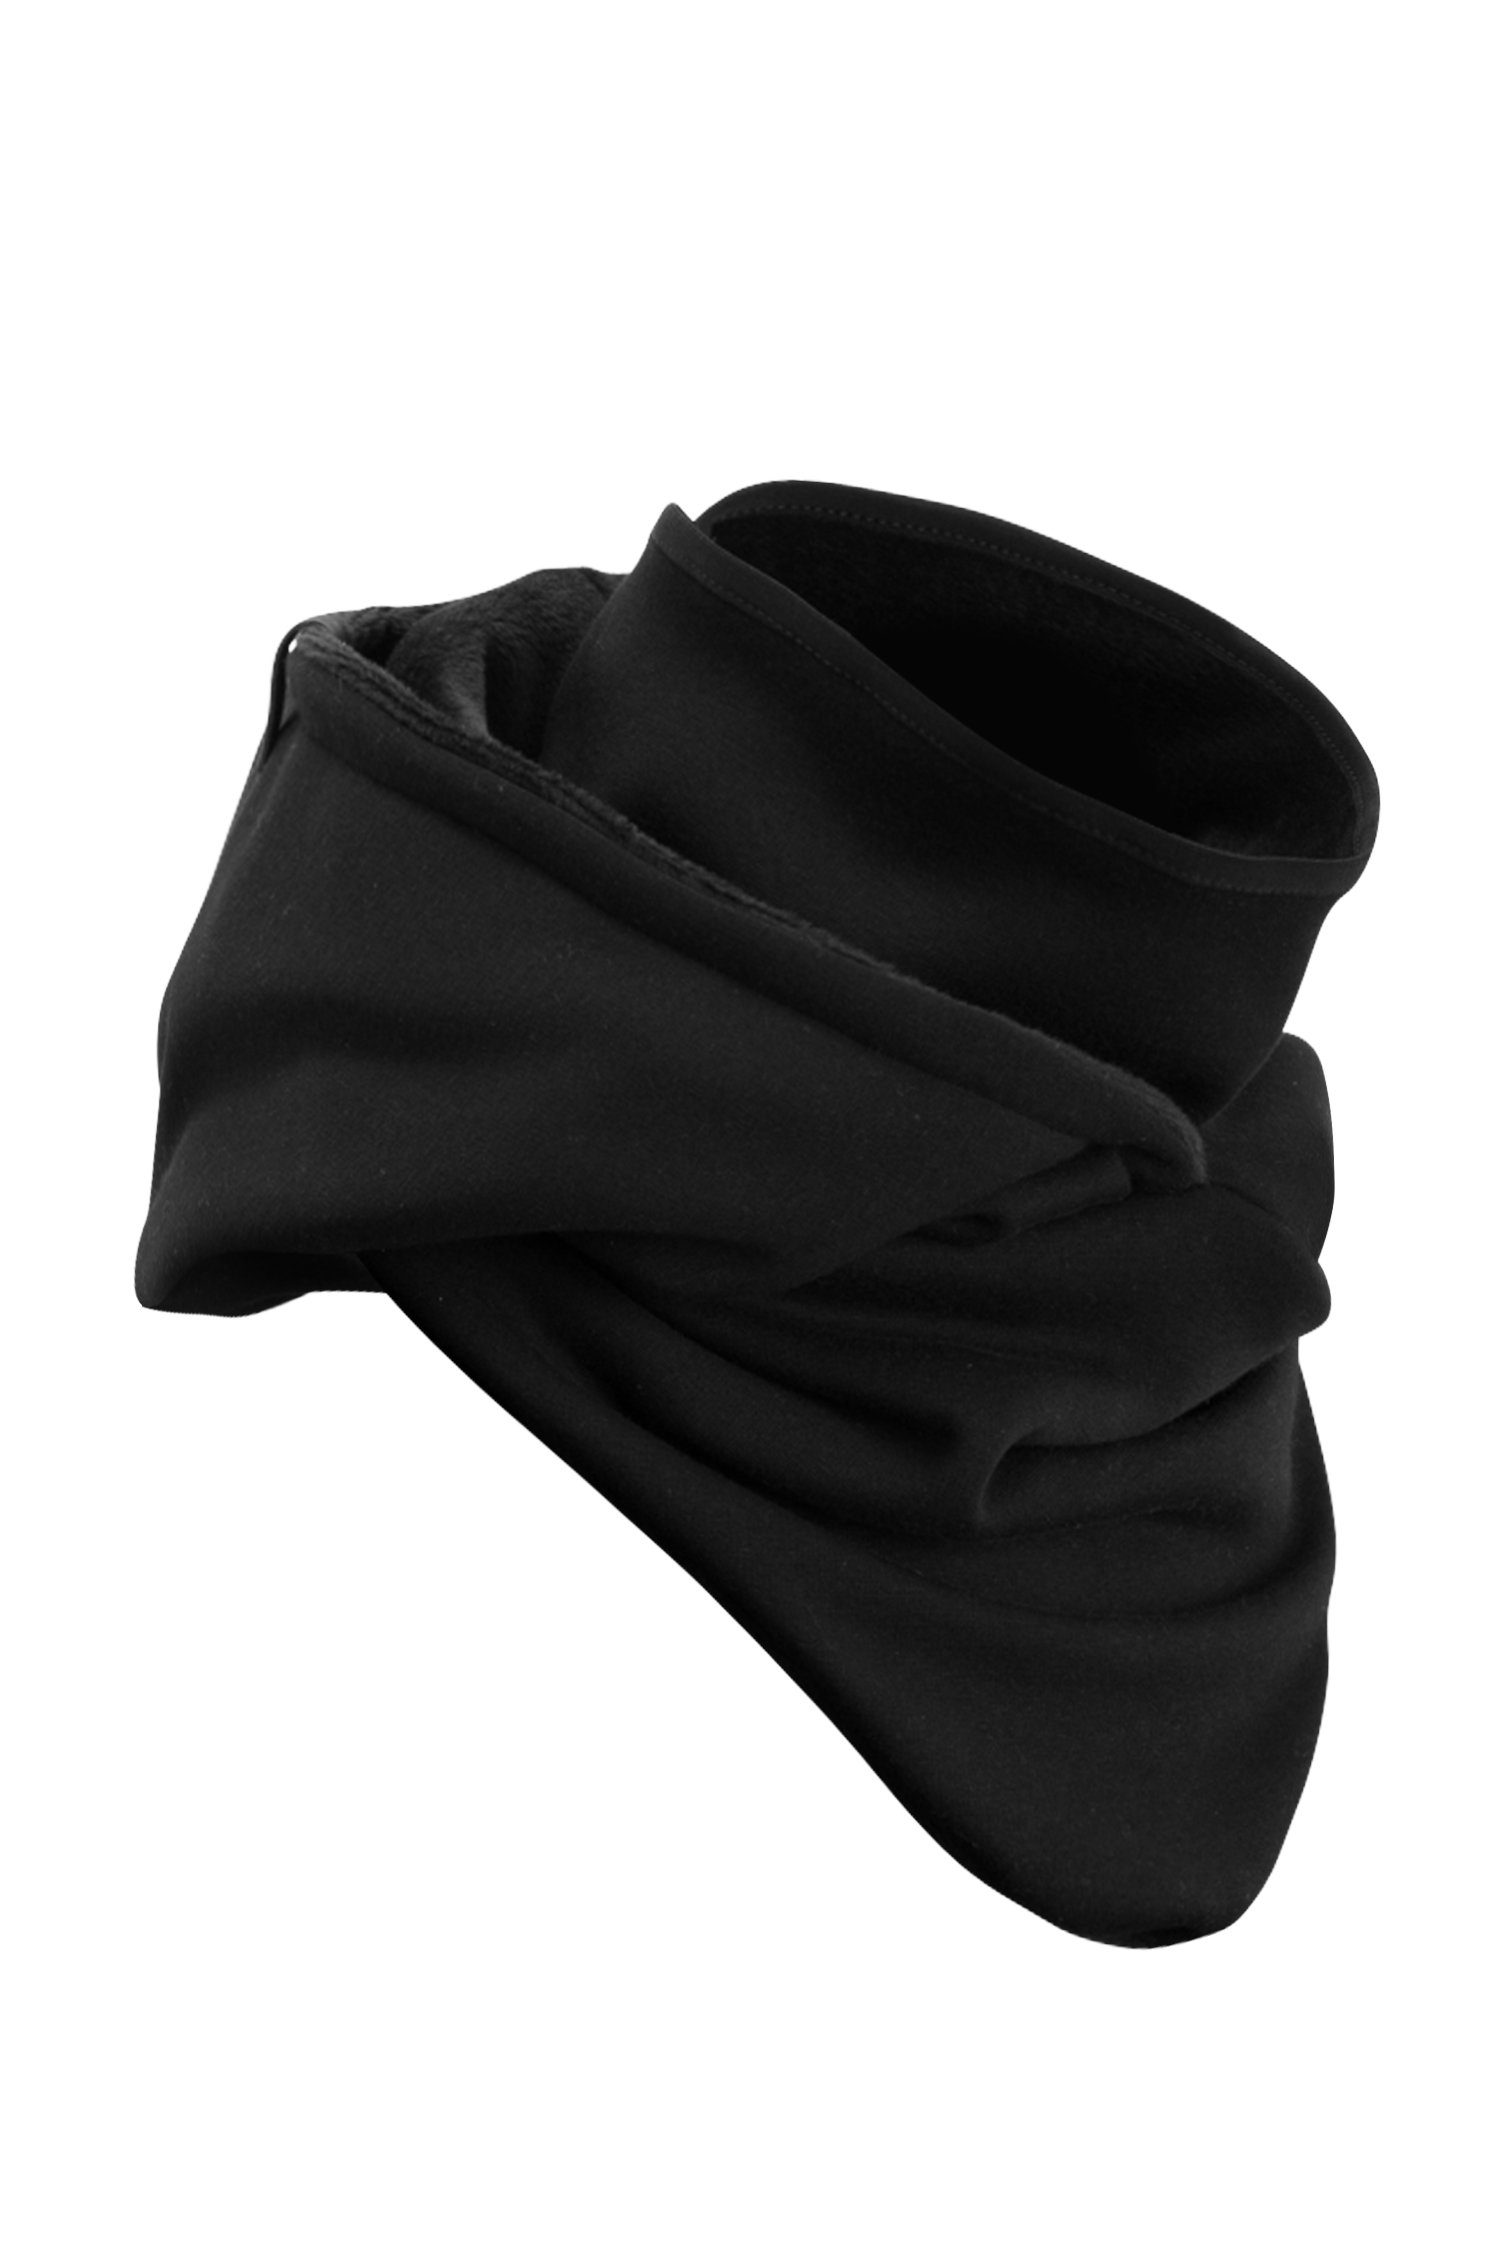 Manufaktur13 Schal Hooded Loop - Schal Alpenfleece, Black integriertem Out aus Windbreaker mit Kapuzenschal